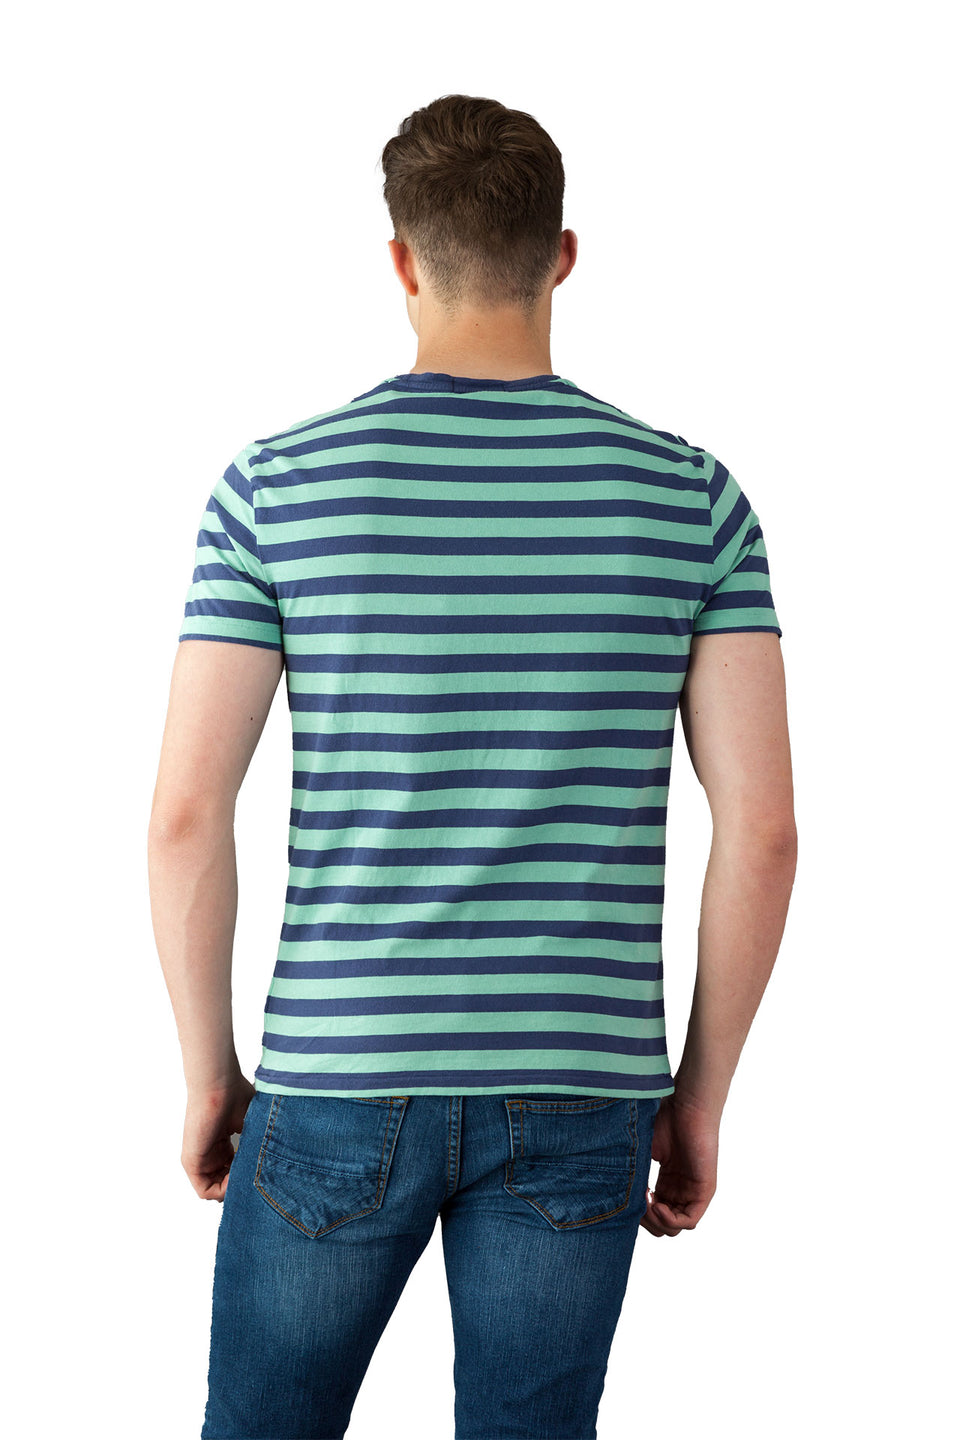 Ralph Lauren Custom Fit Stripe Crew Neck T Shirt - Camden Connaught